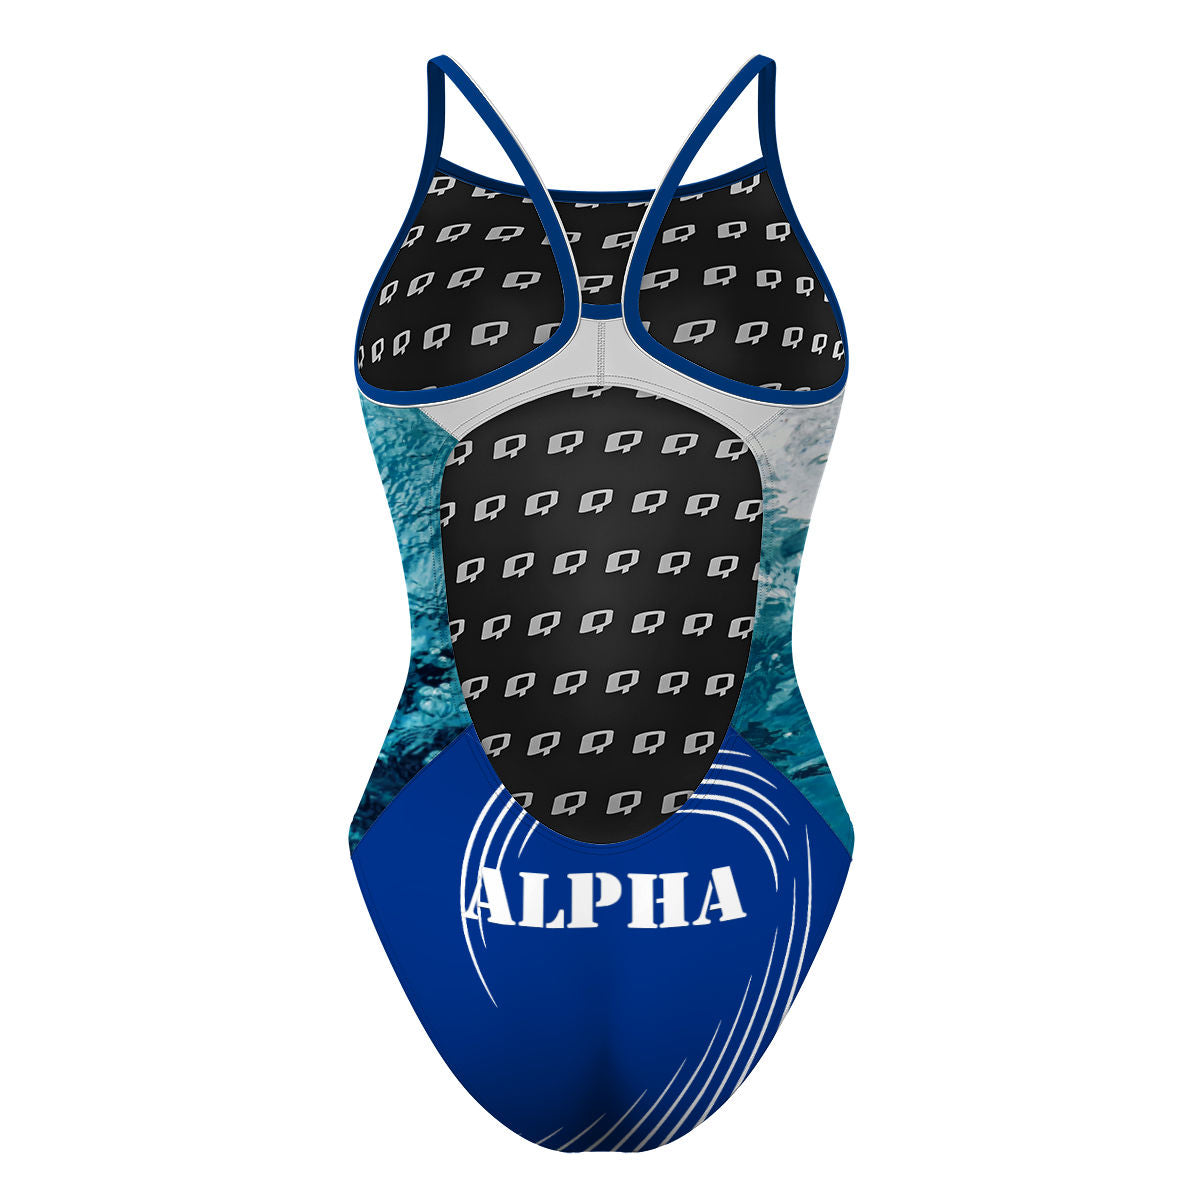 AlphaNew - Skinny Strap Swimsuit